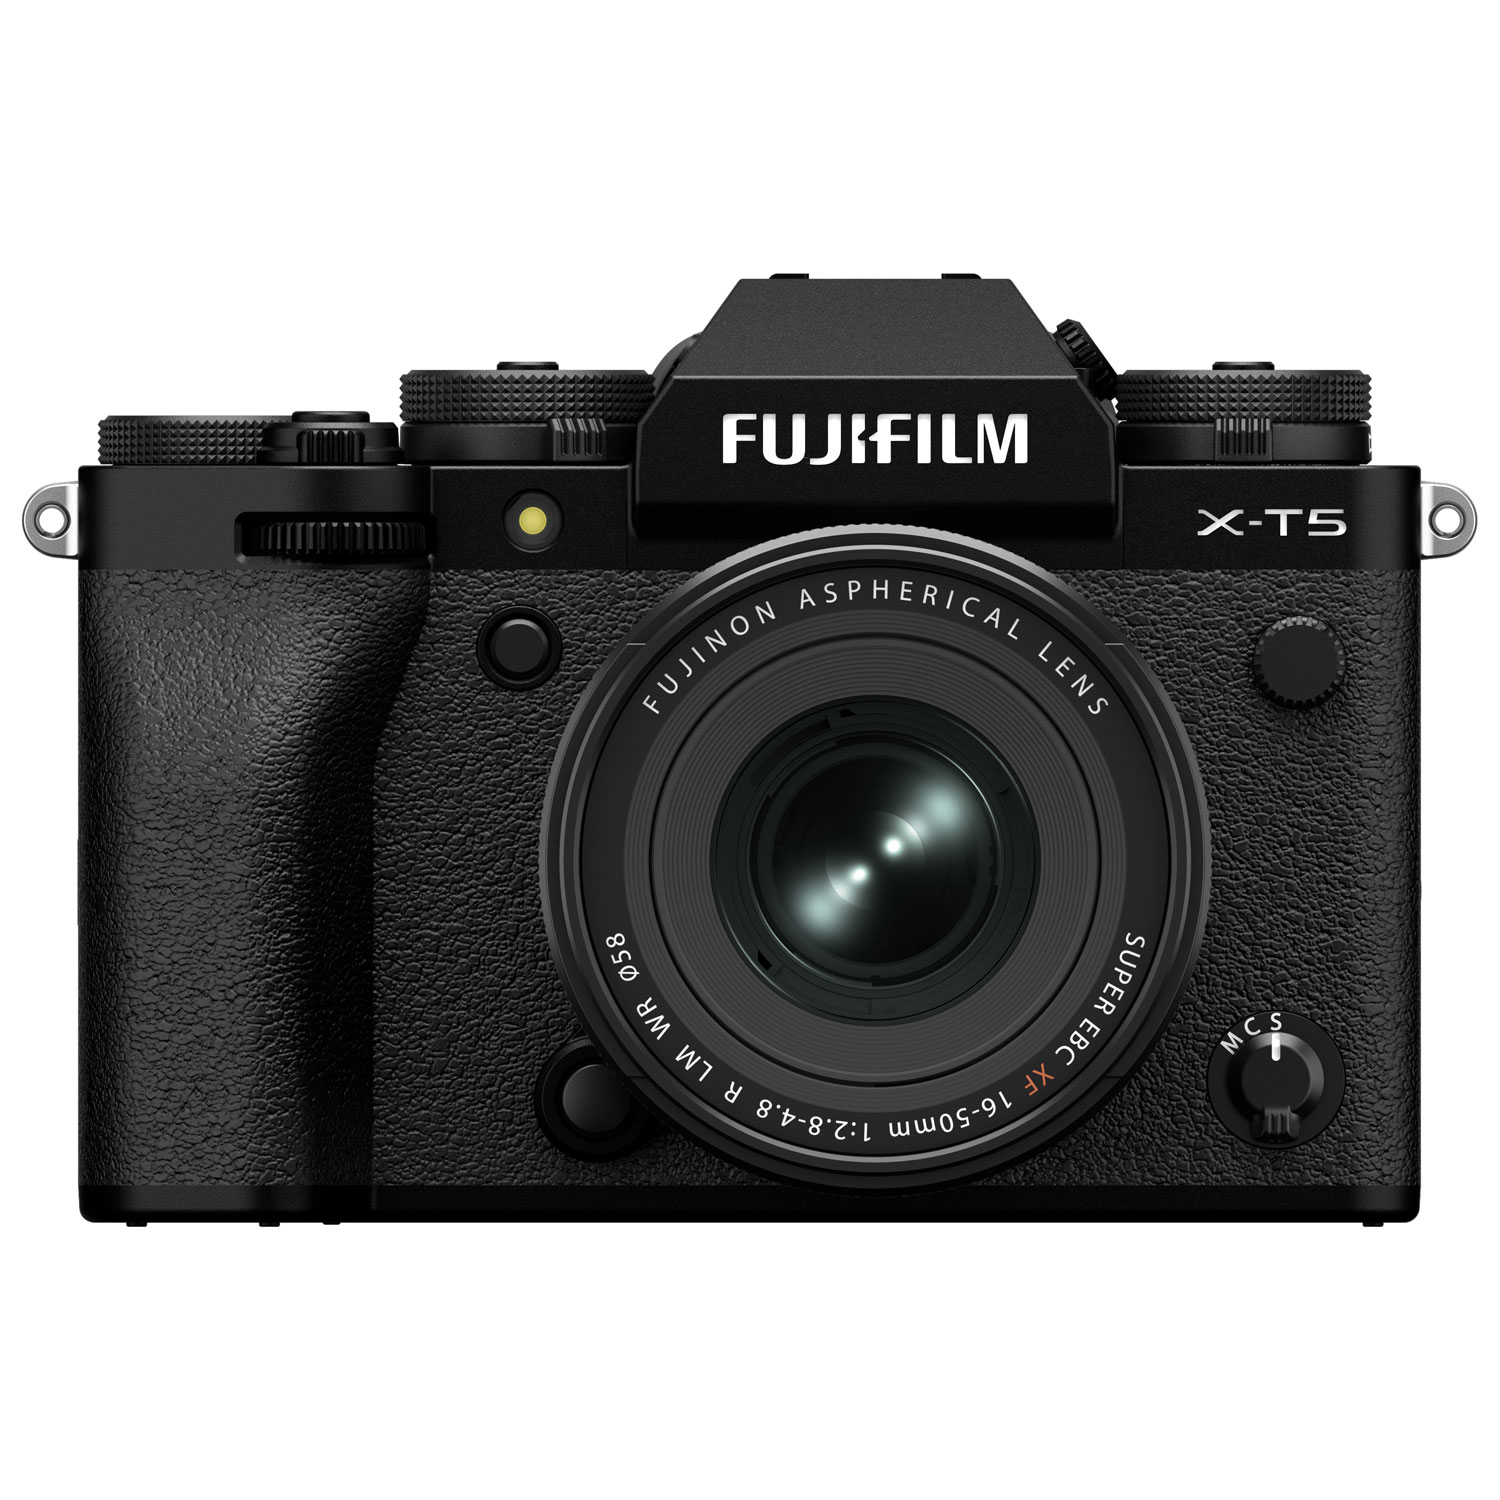 Fujifilm X-T5 Mirrorless Camera with 16-50mm Lens Kit - Black